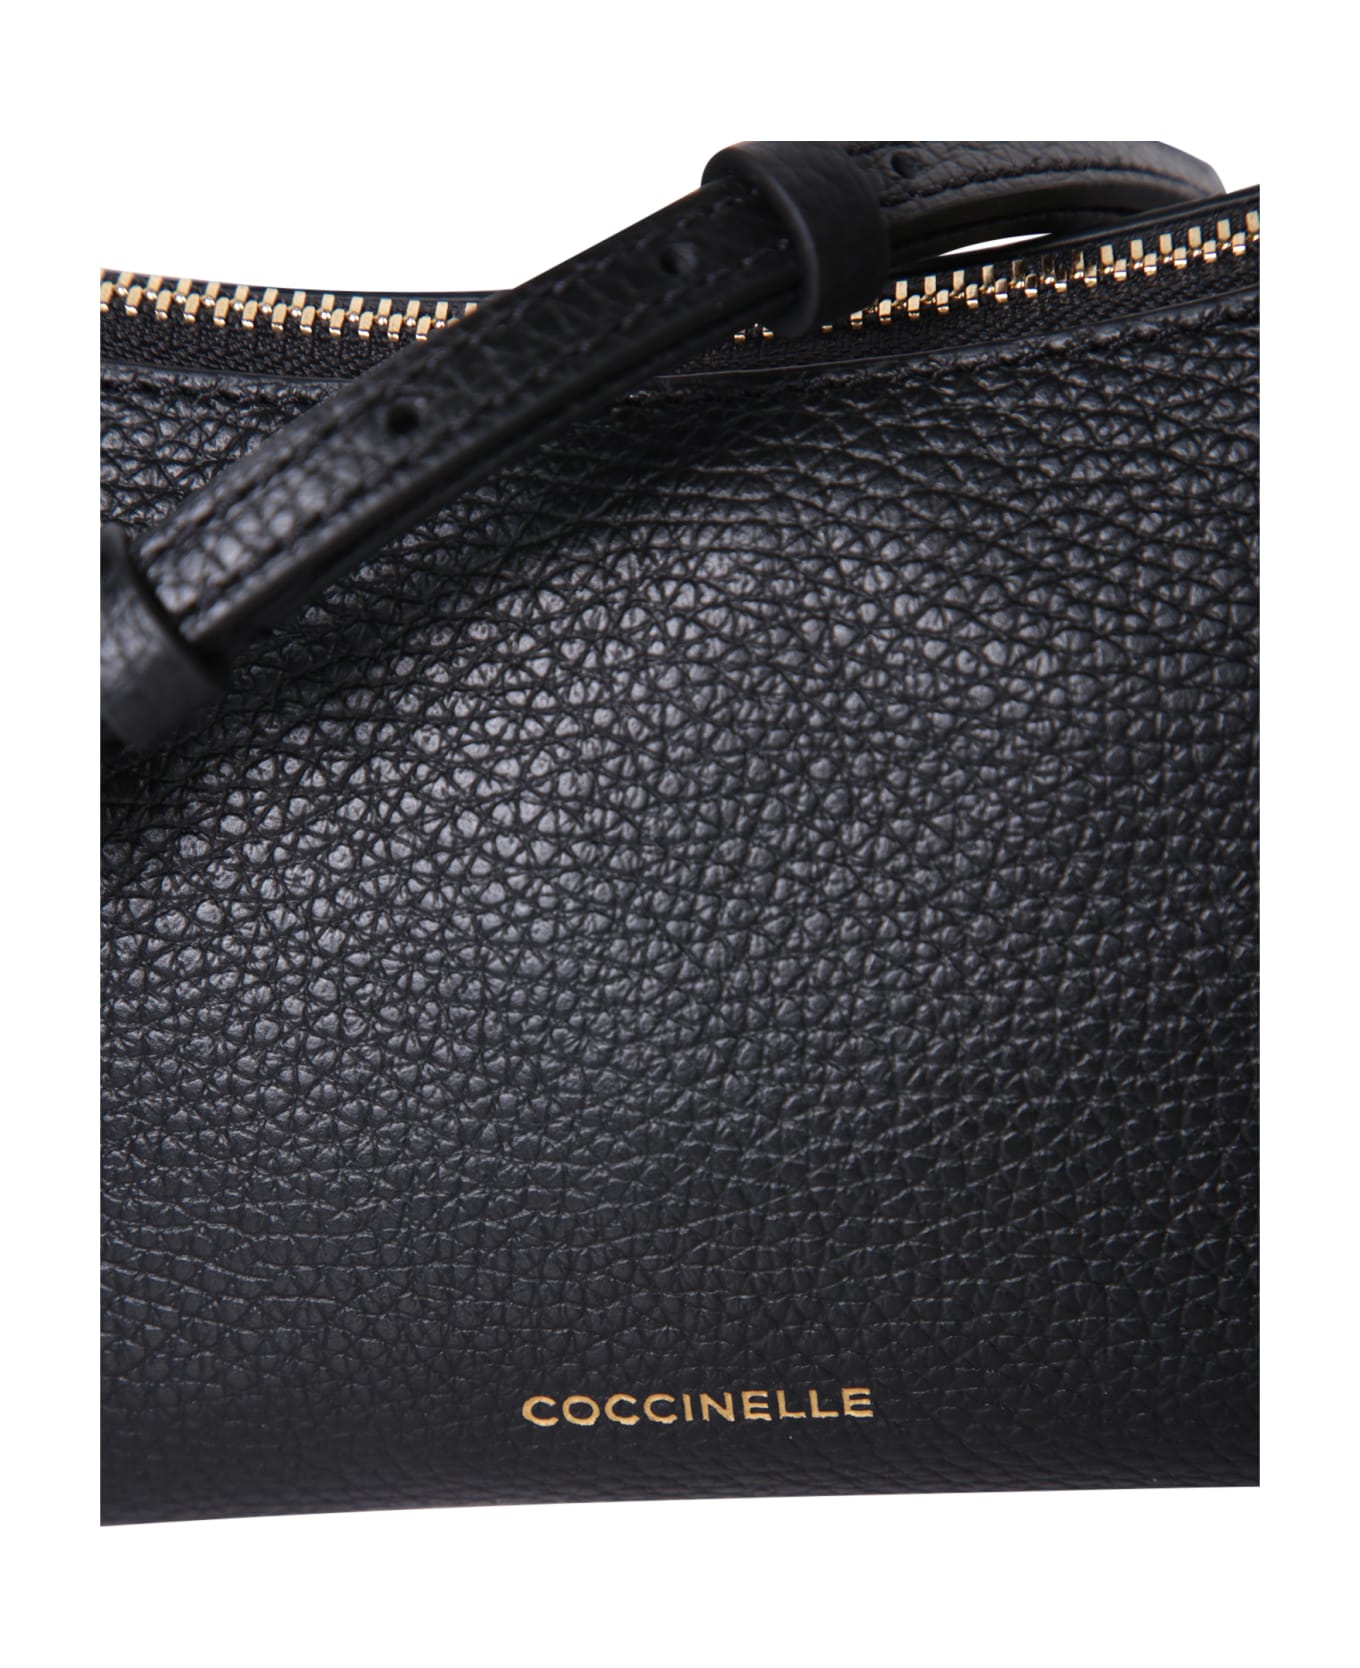 Coccinelle Aura Black Leather Bag - Black ショルダーバッグ